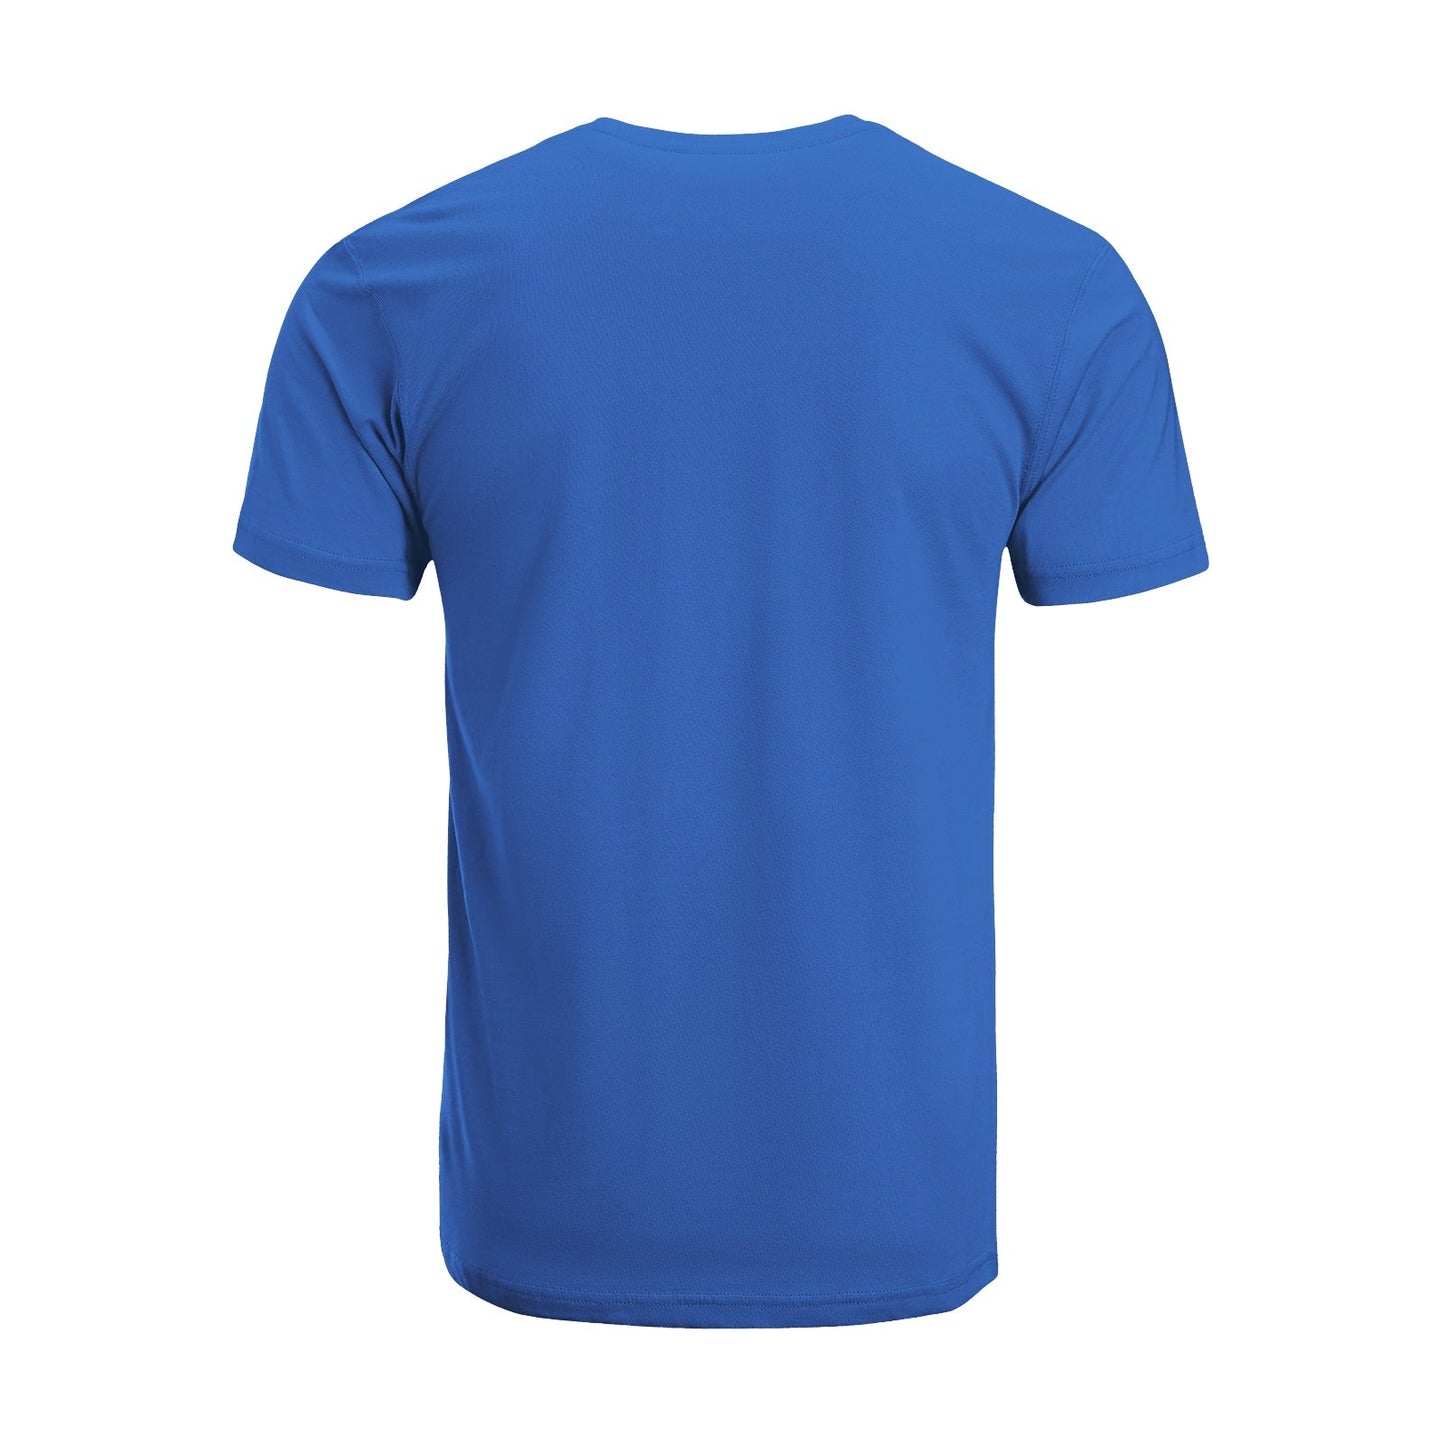 Unisex Short Sleeve Crew Neck Cotton Jersey T-Shirt USA 23